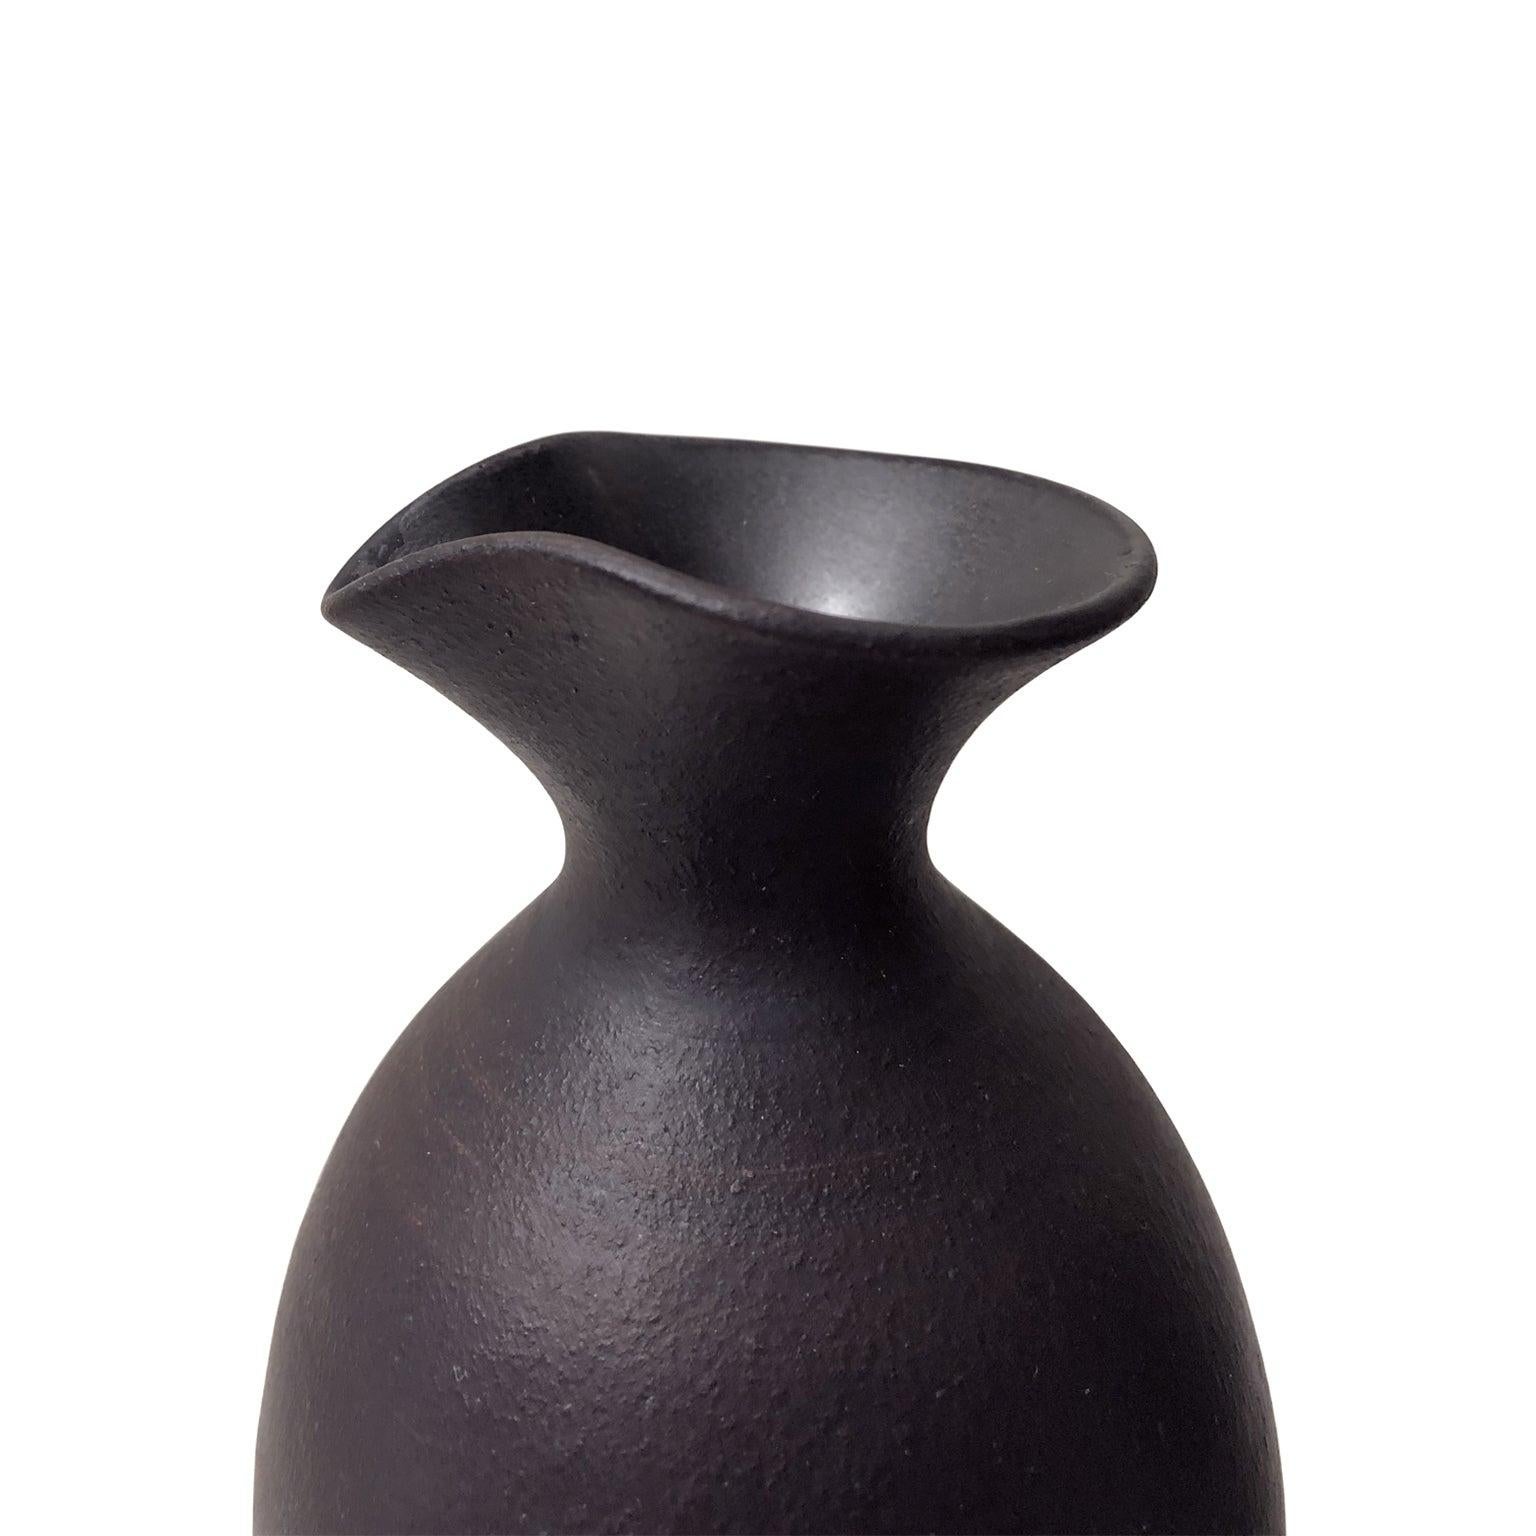 Medium matte black ceramic bottle vase with large spout neck and flared base by Sandi Fellman, 2019.
  